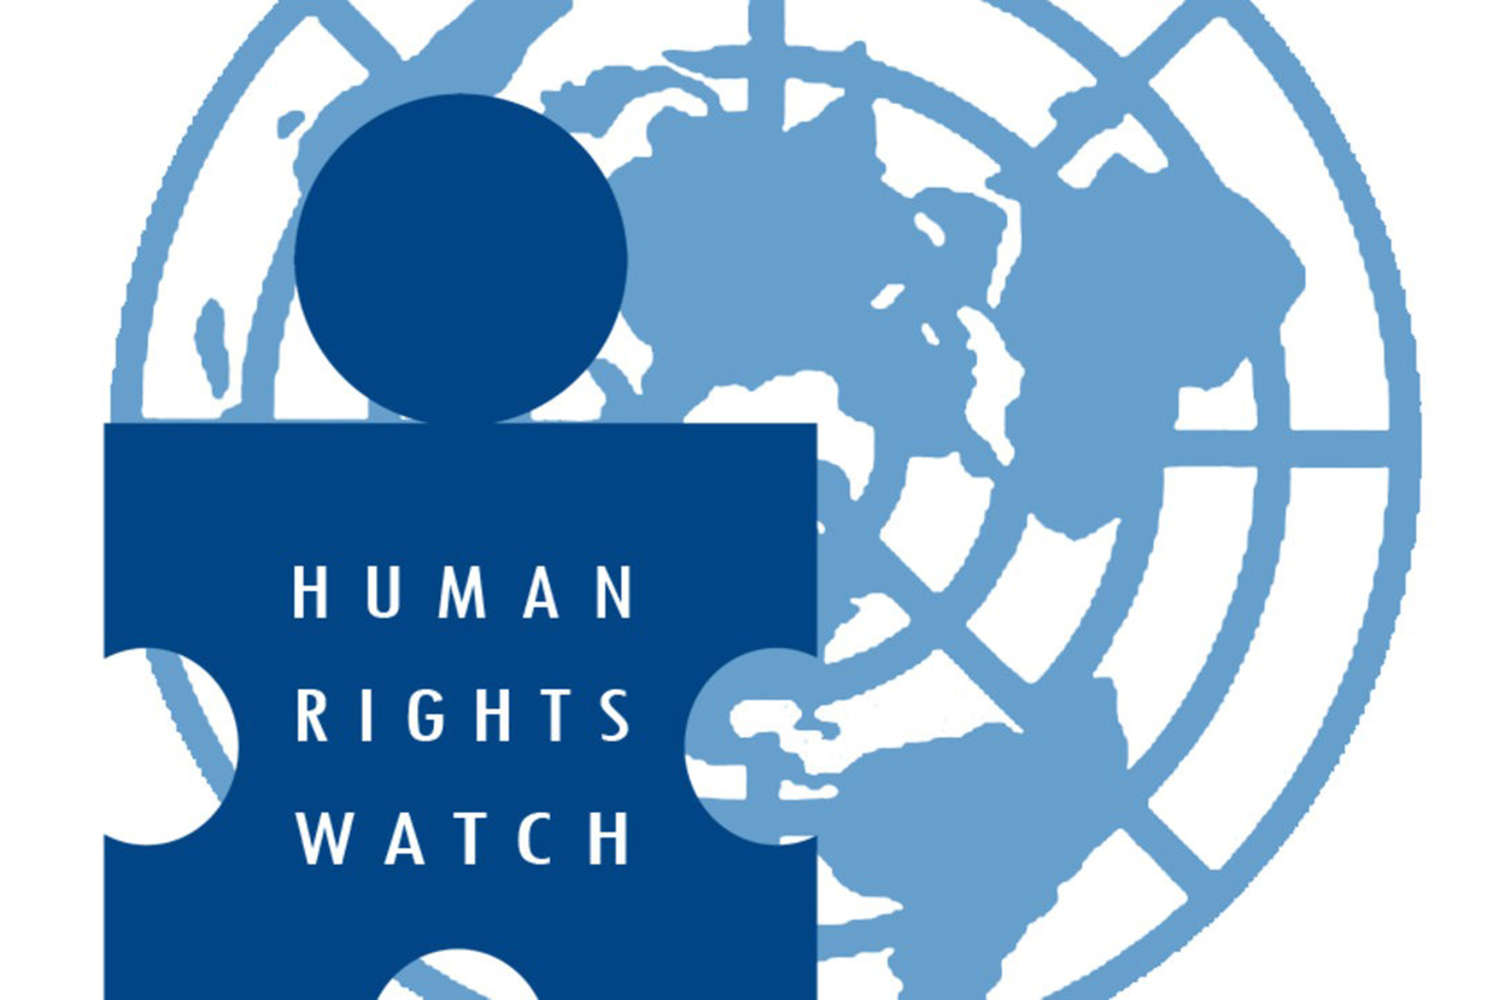 Rights org. Human rights watch. Правозащитная организация Human rights watch. Организация ХЬЮМАН Райтс вотч.